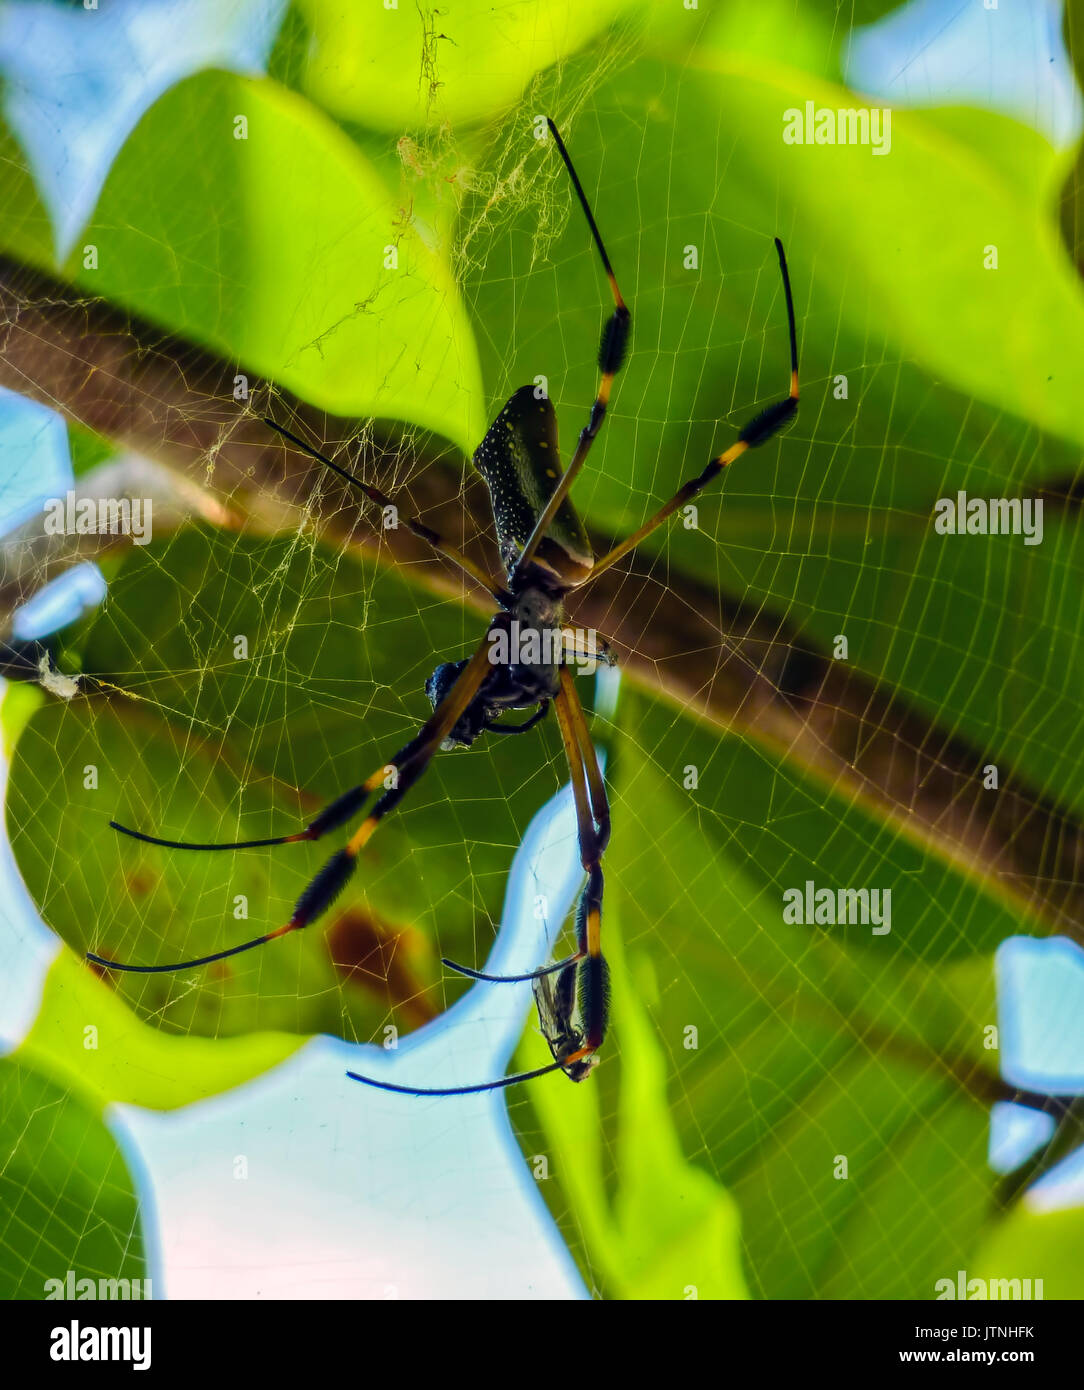 Golden Orb Spider in its web, Cahuita, Costa Rica Stock Photo